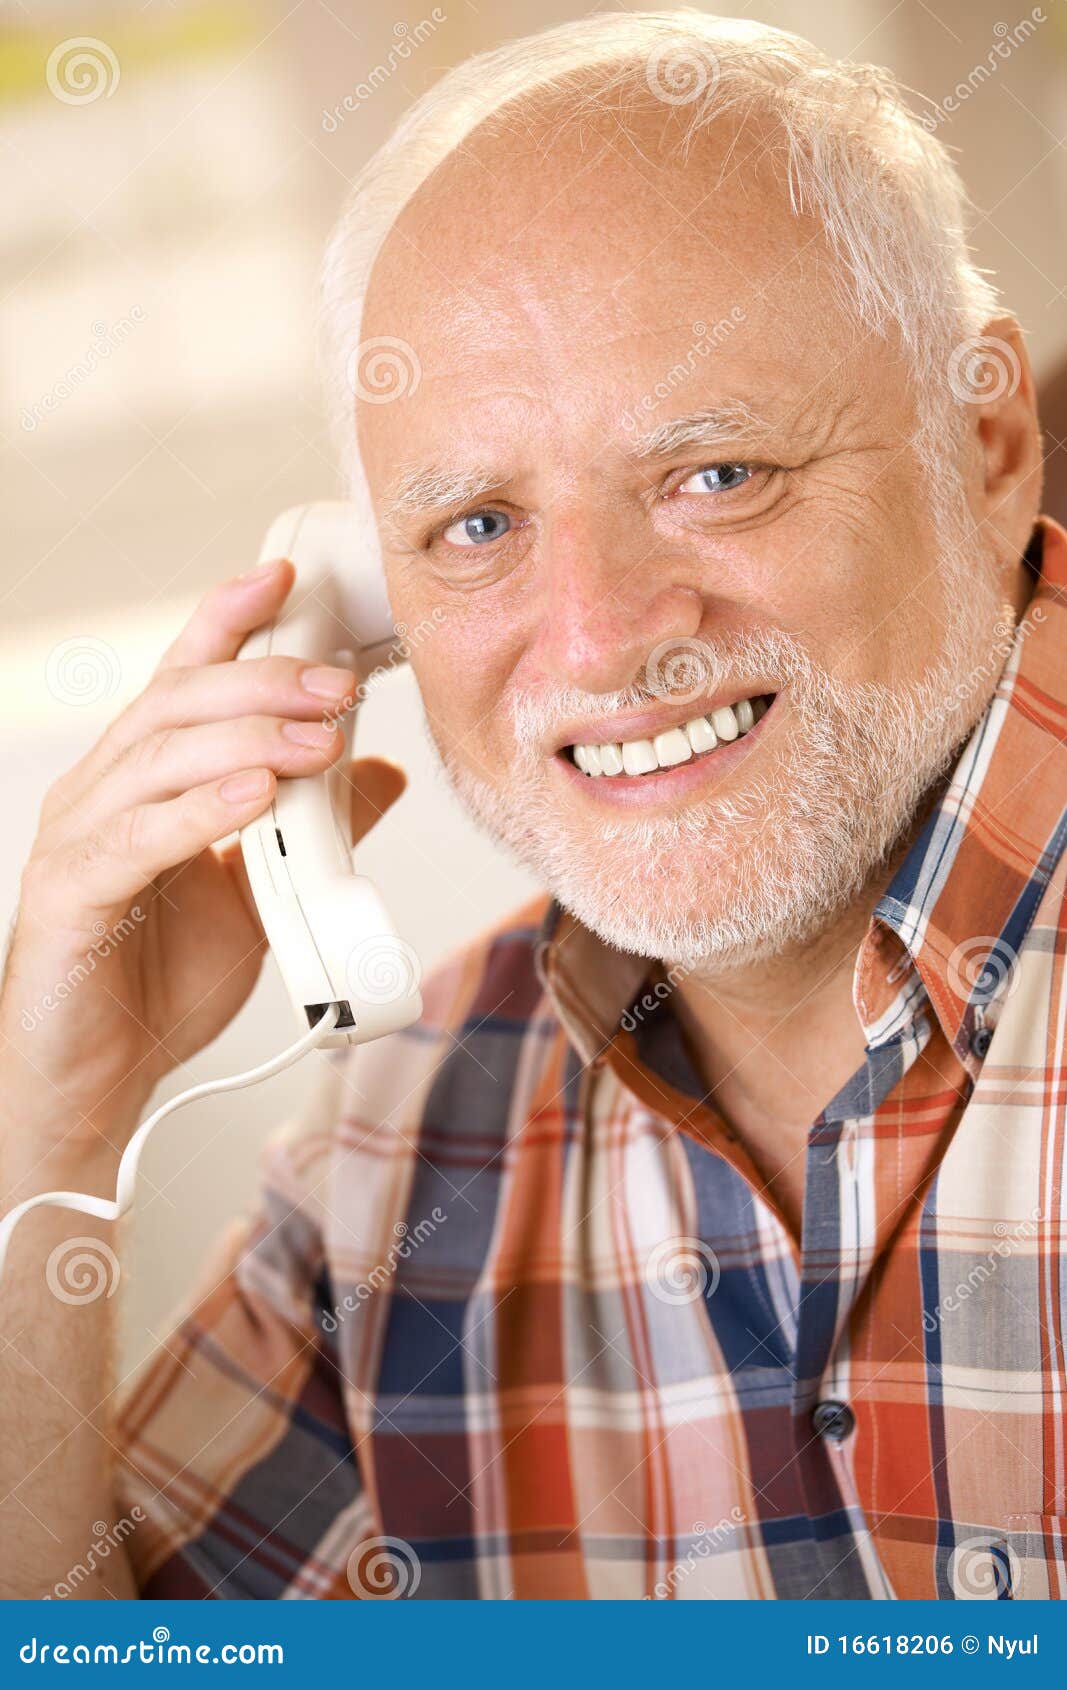 older man on landline phone call